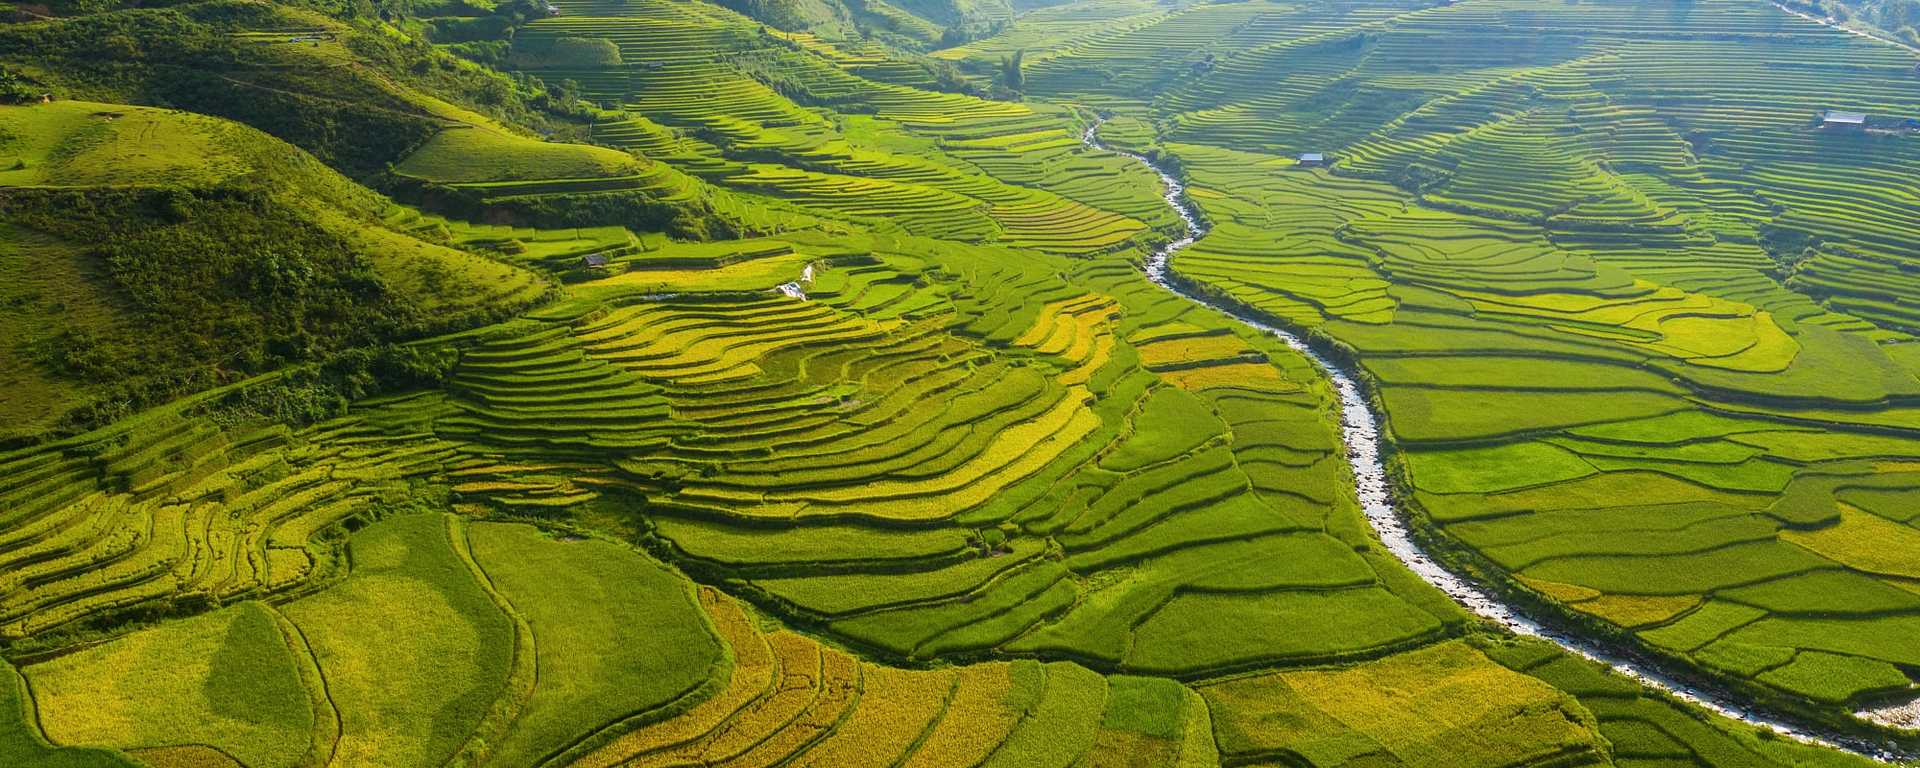 Rice terraces in the Yên Bái Province, Vietnam